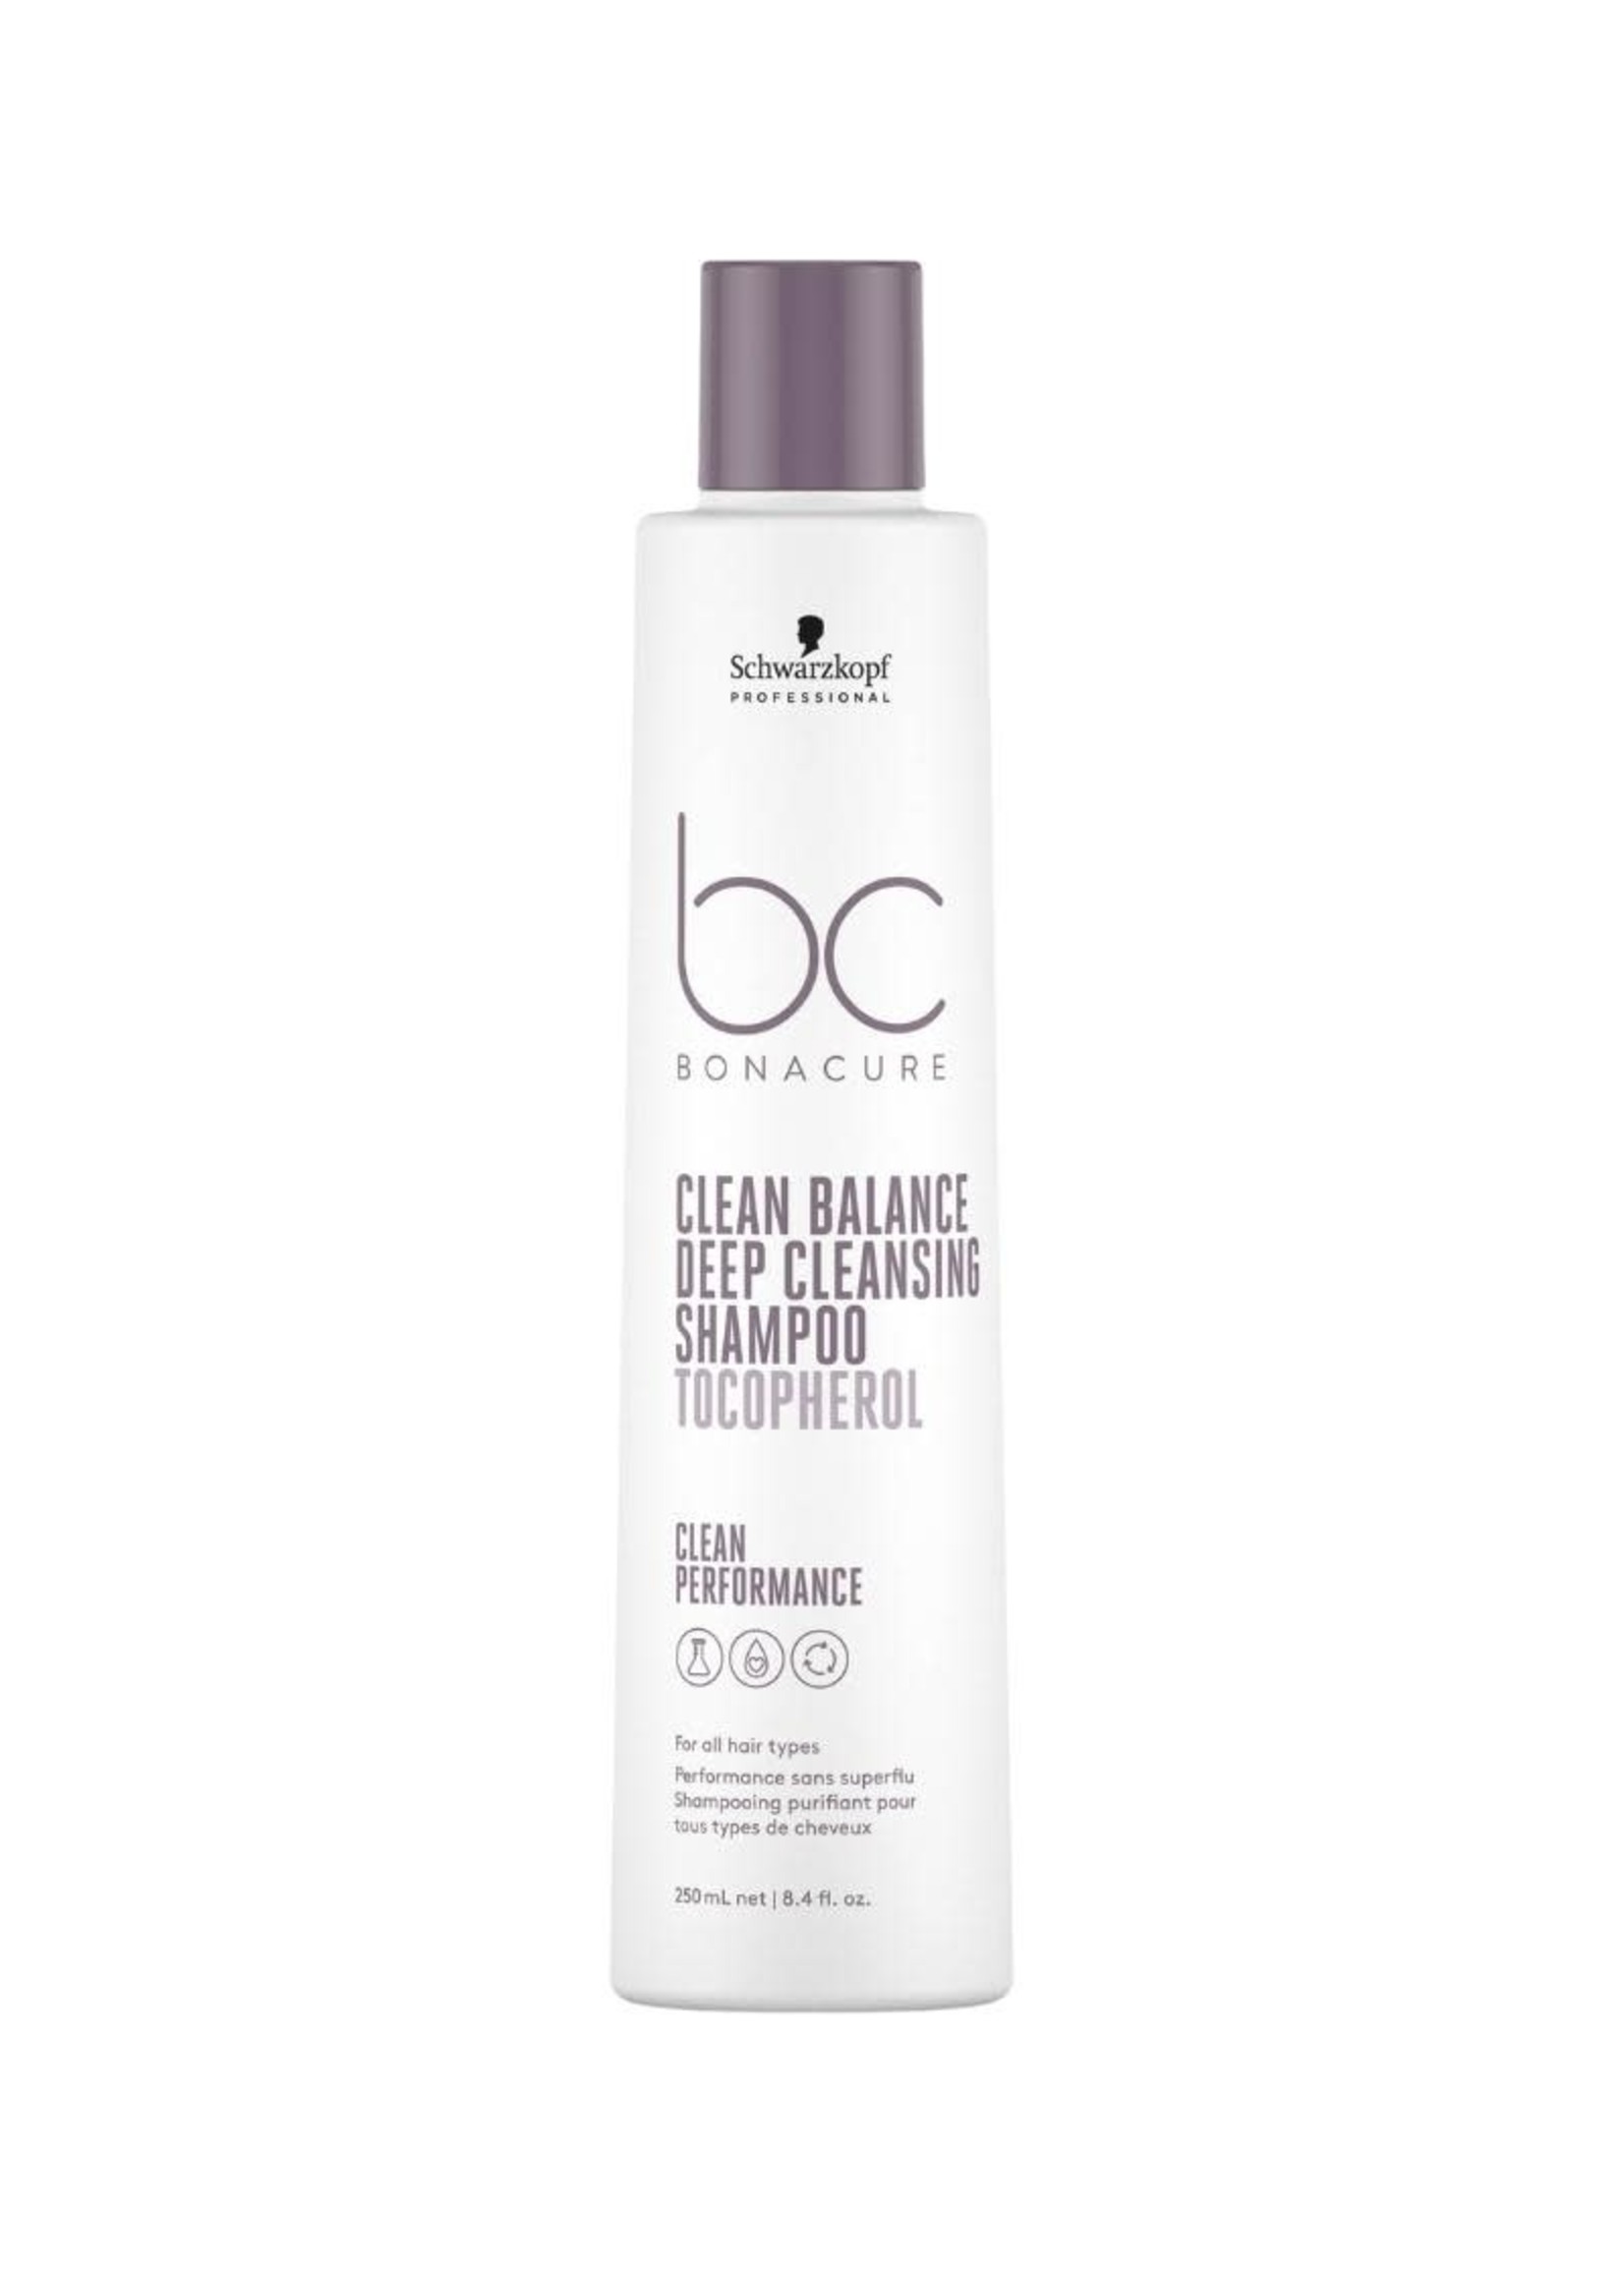 Schwarzkopf Professional Schwarzkopf BC Bonacure Clean Performance Clean Balance Deep Cleansing Shampoo 250ml